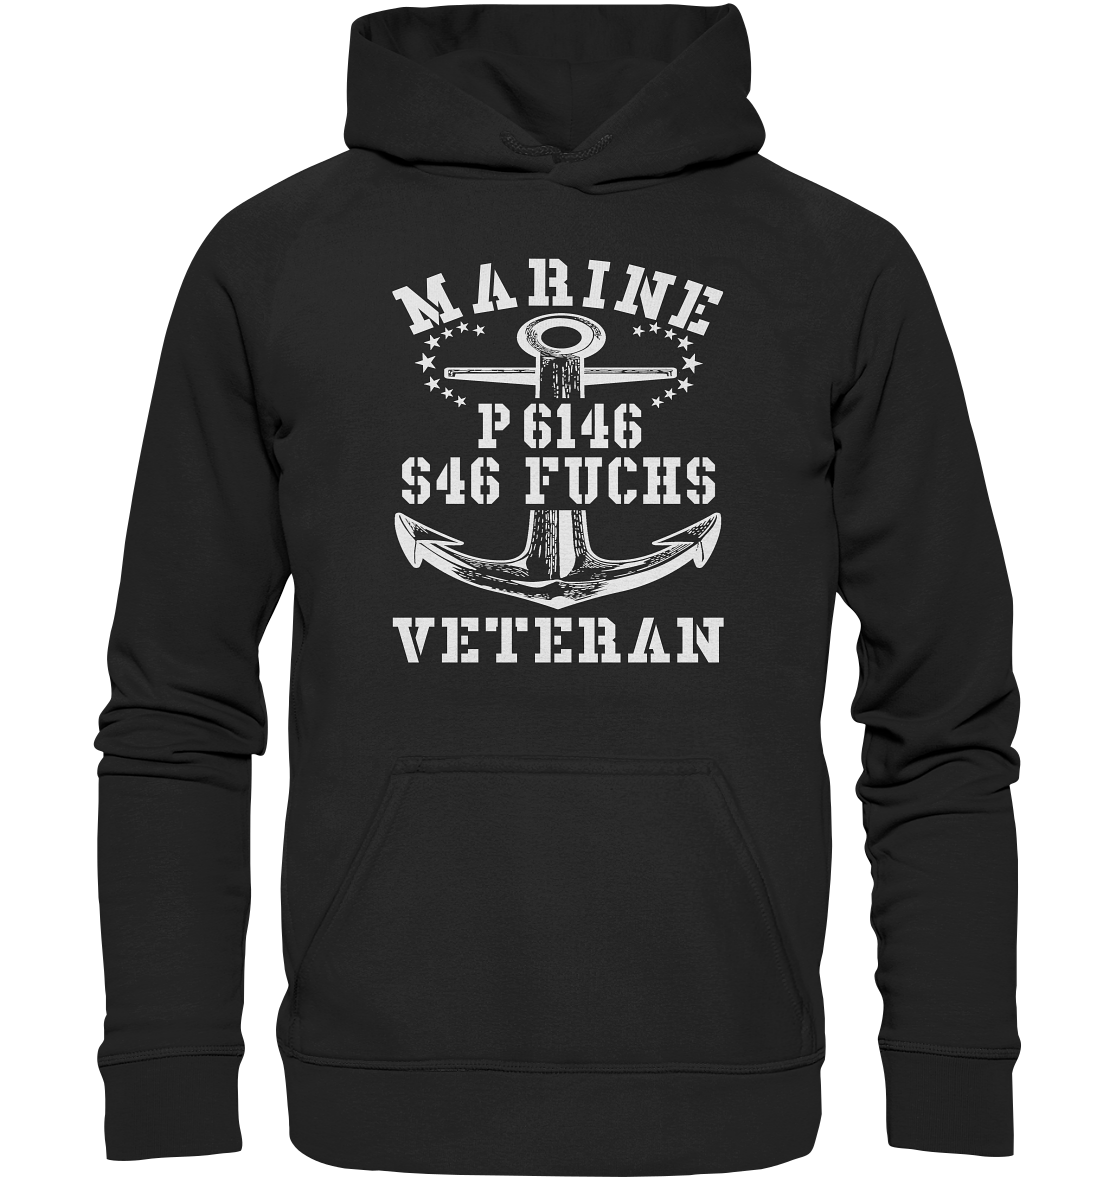 P6146 S46 FUCHS Marine Veteran - Basic Unisex Hoodie XL